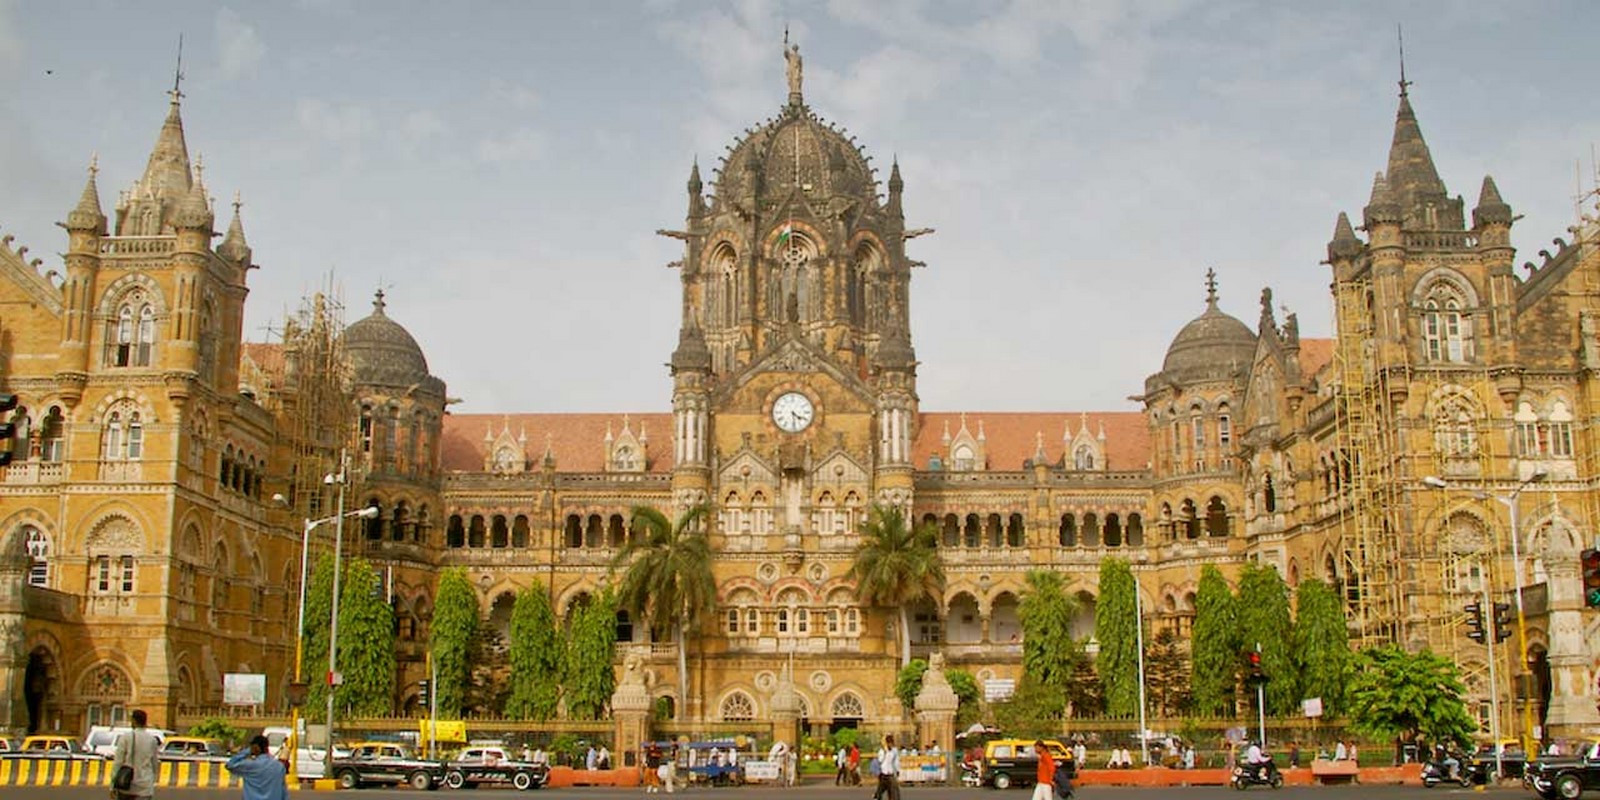 Heritage architecture - Mumbai - Sheet1